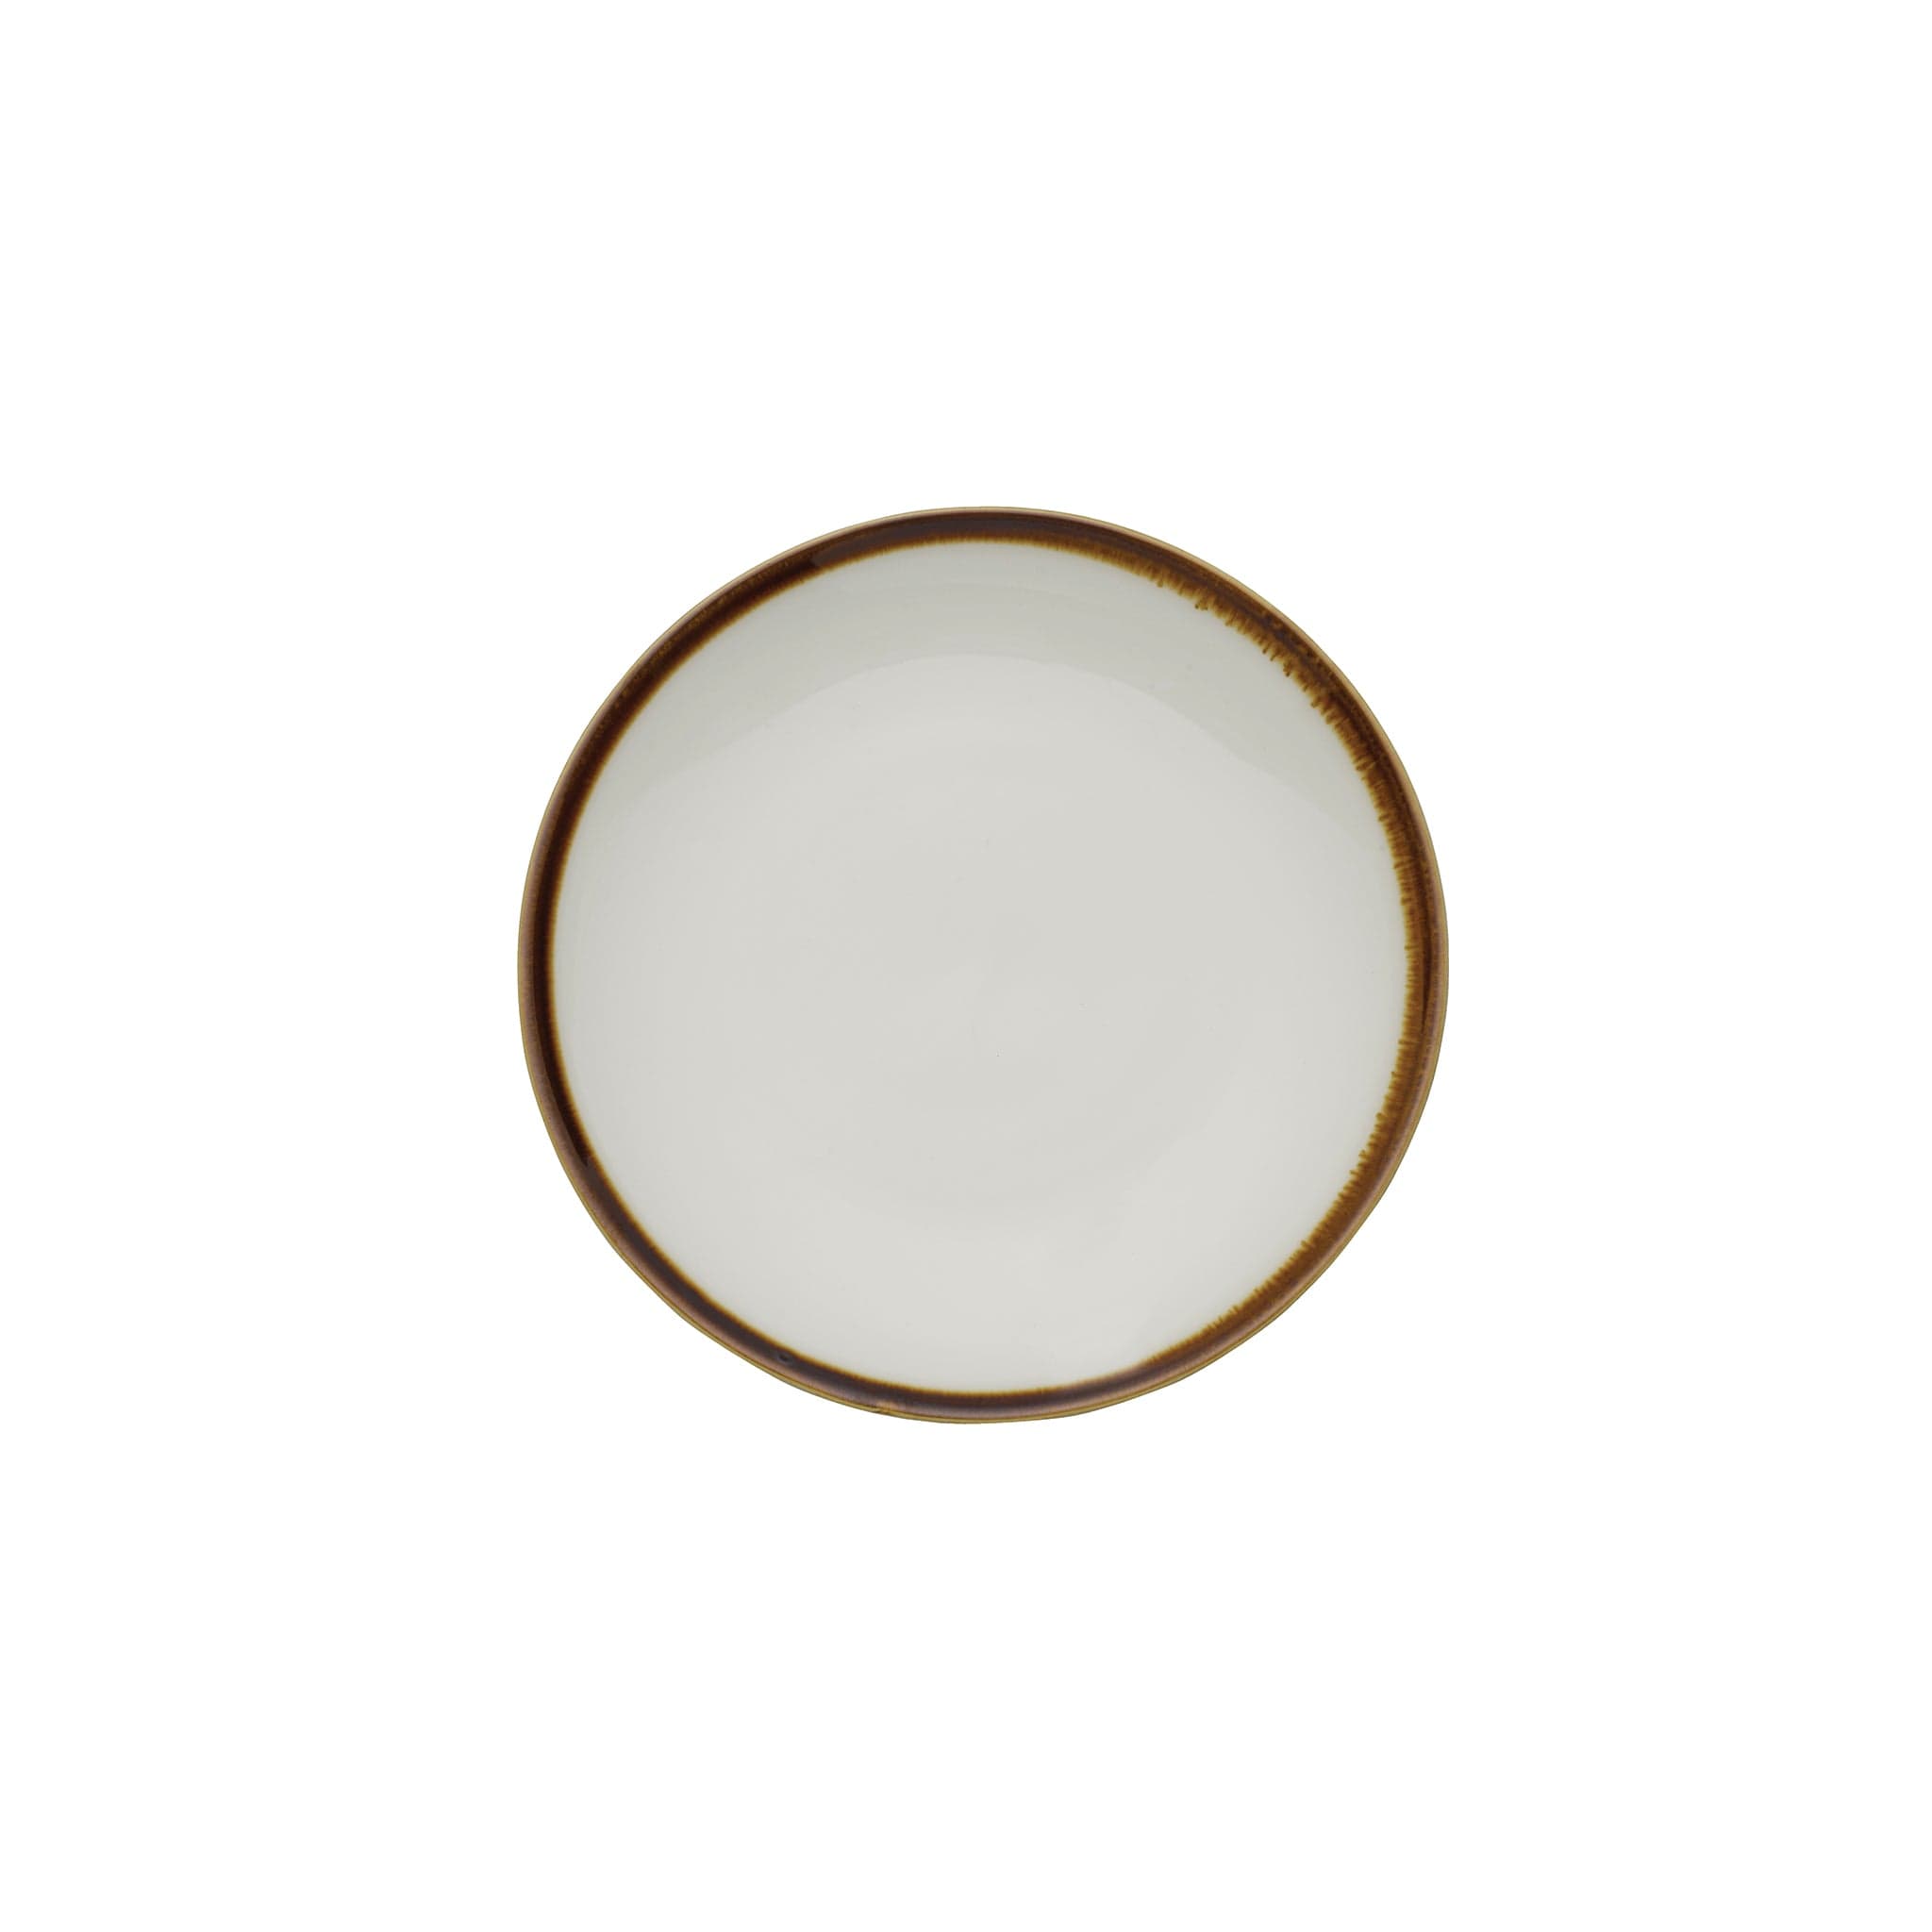 Lodge Porcelain Coupe Plate 11" Cream White